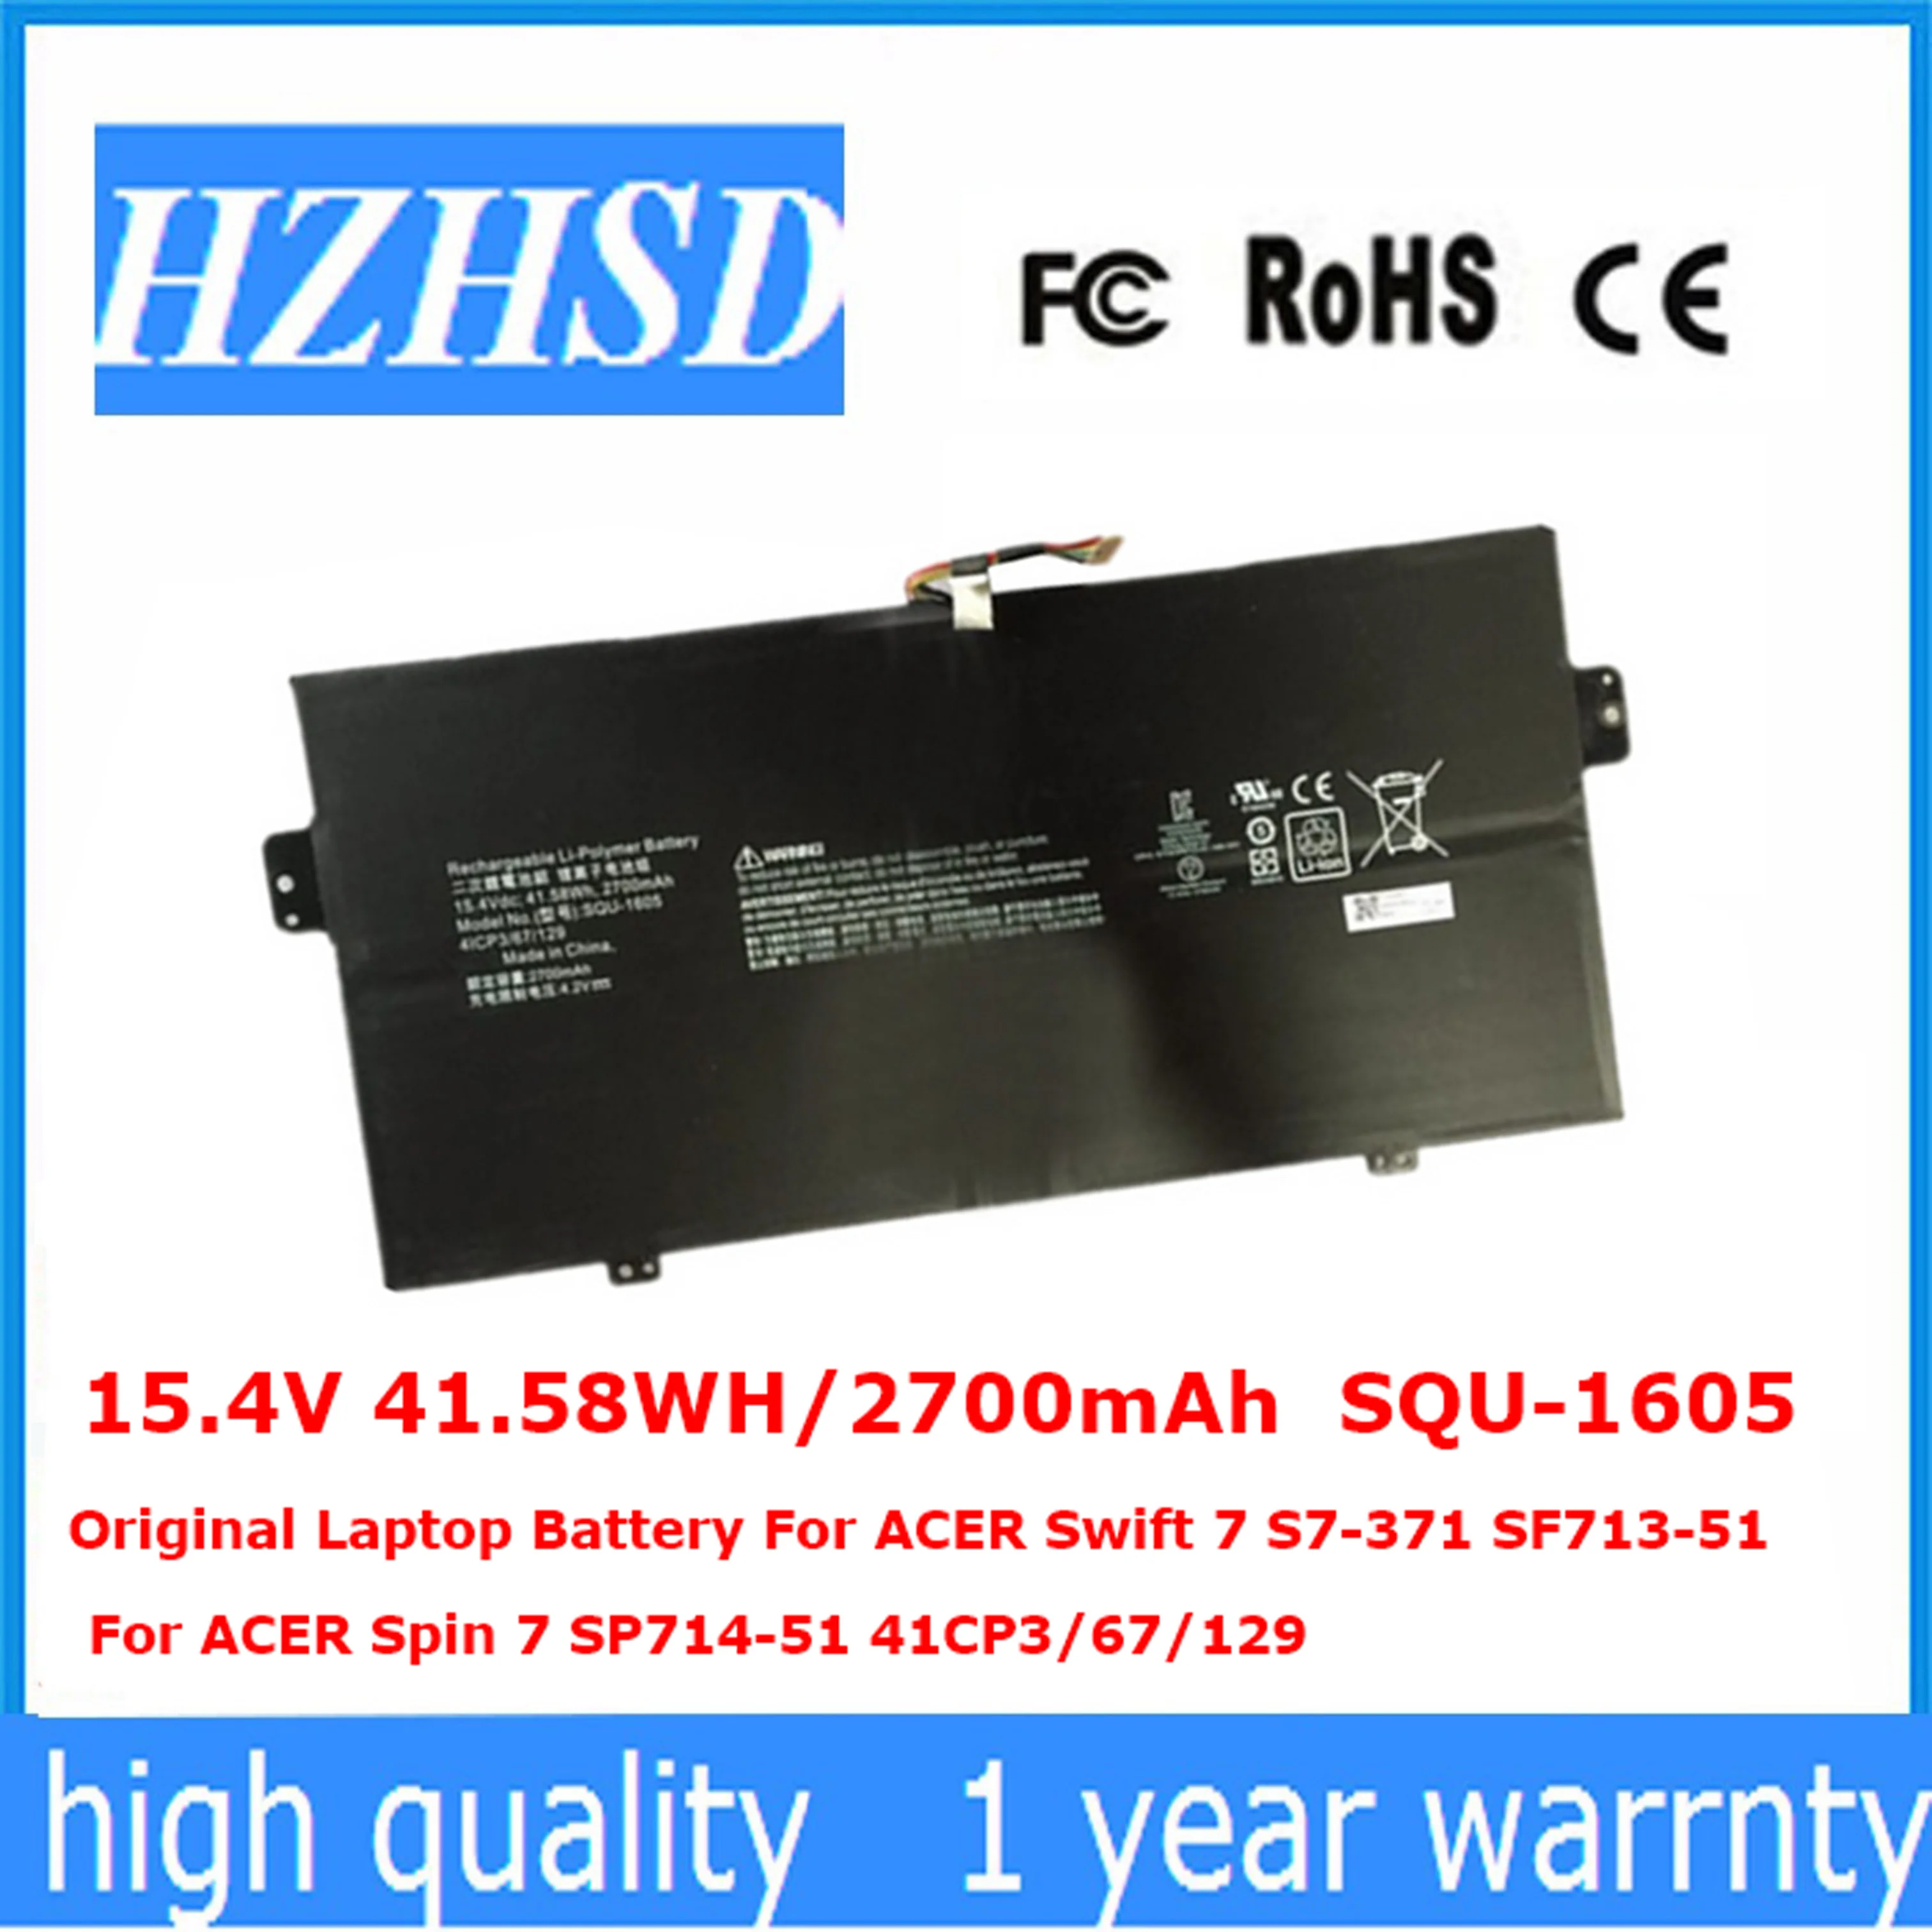 

15.4V 41.58WH/2700mAh SQU-1605 Original Laptop Battery For ACER Swift 7 S7-371 SF713-51 For ACER Spin 7 SP714-51 41CP3/67/129